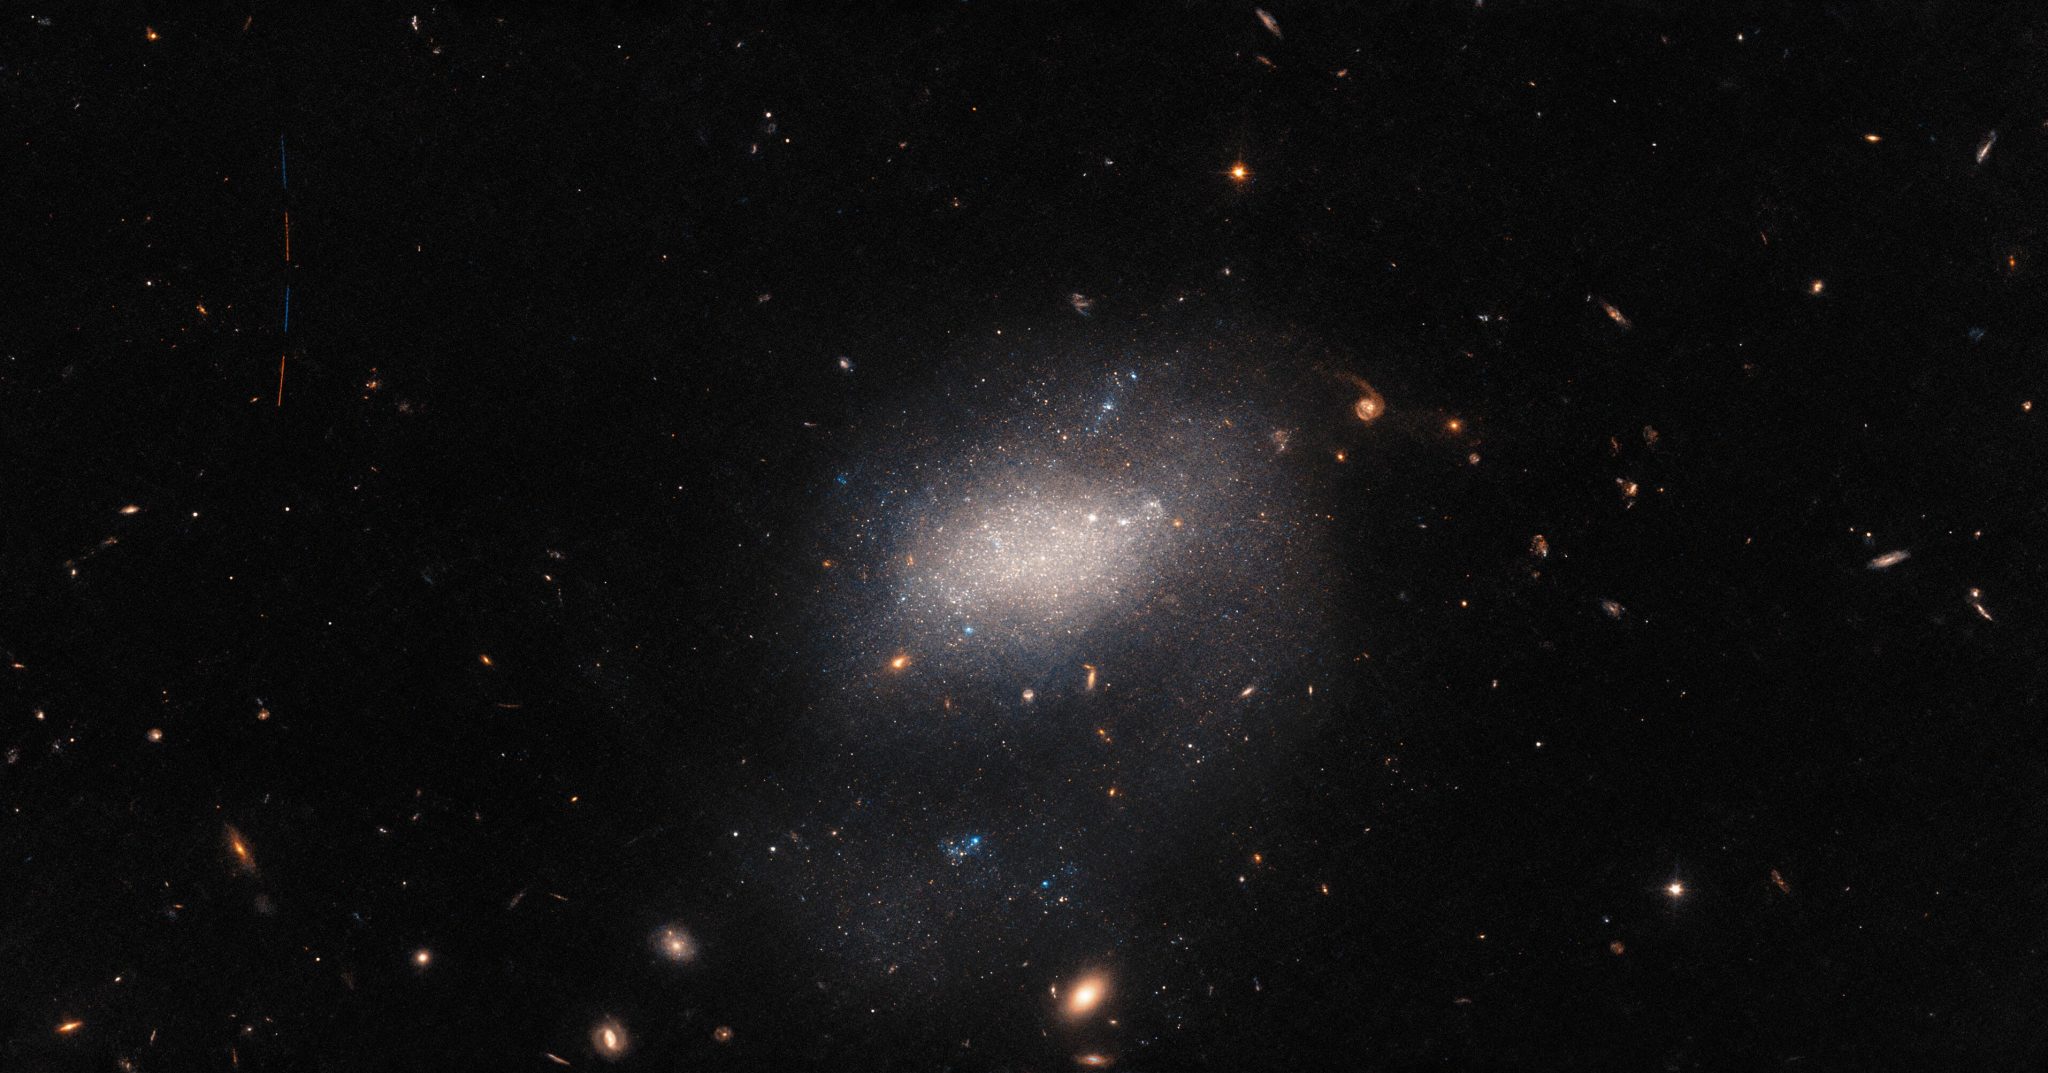 Galaxy UGC 7983